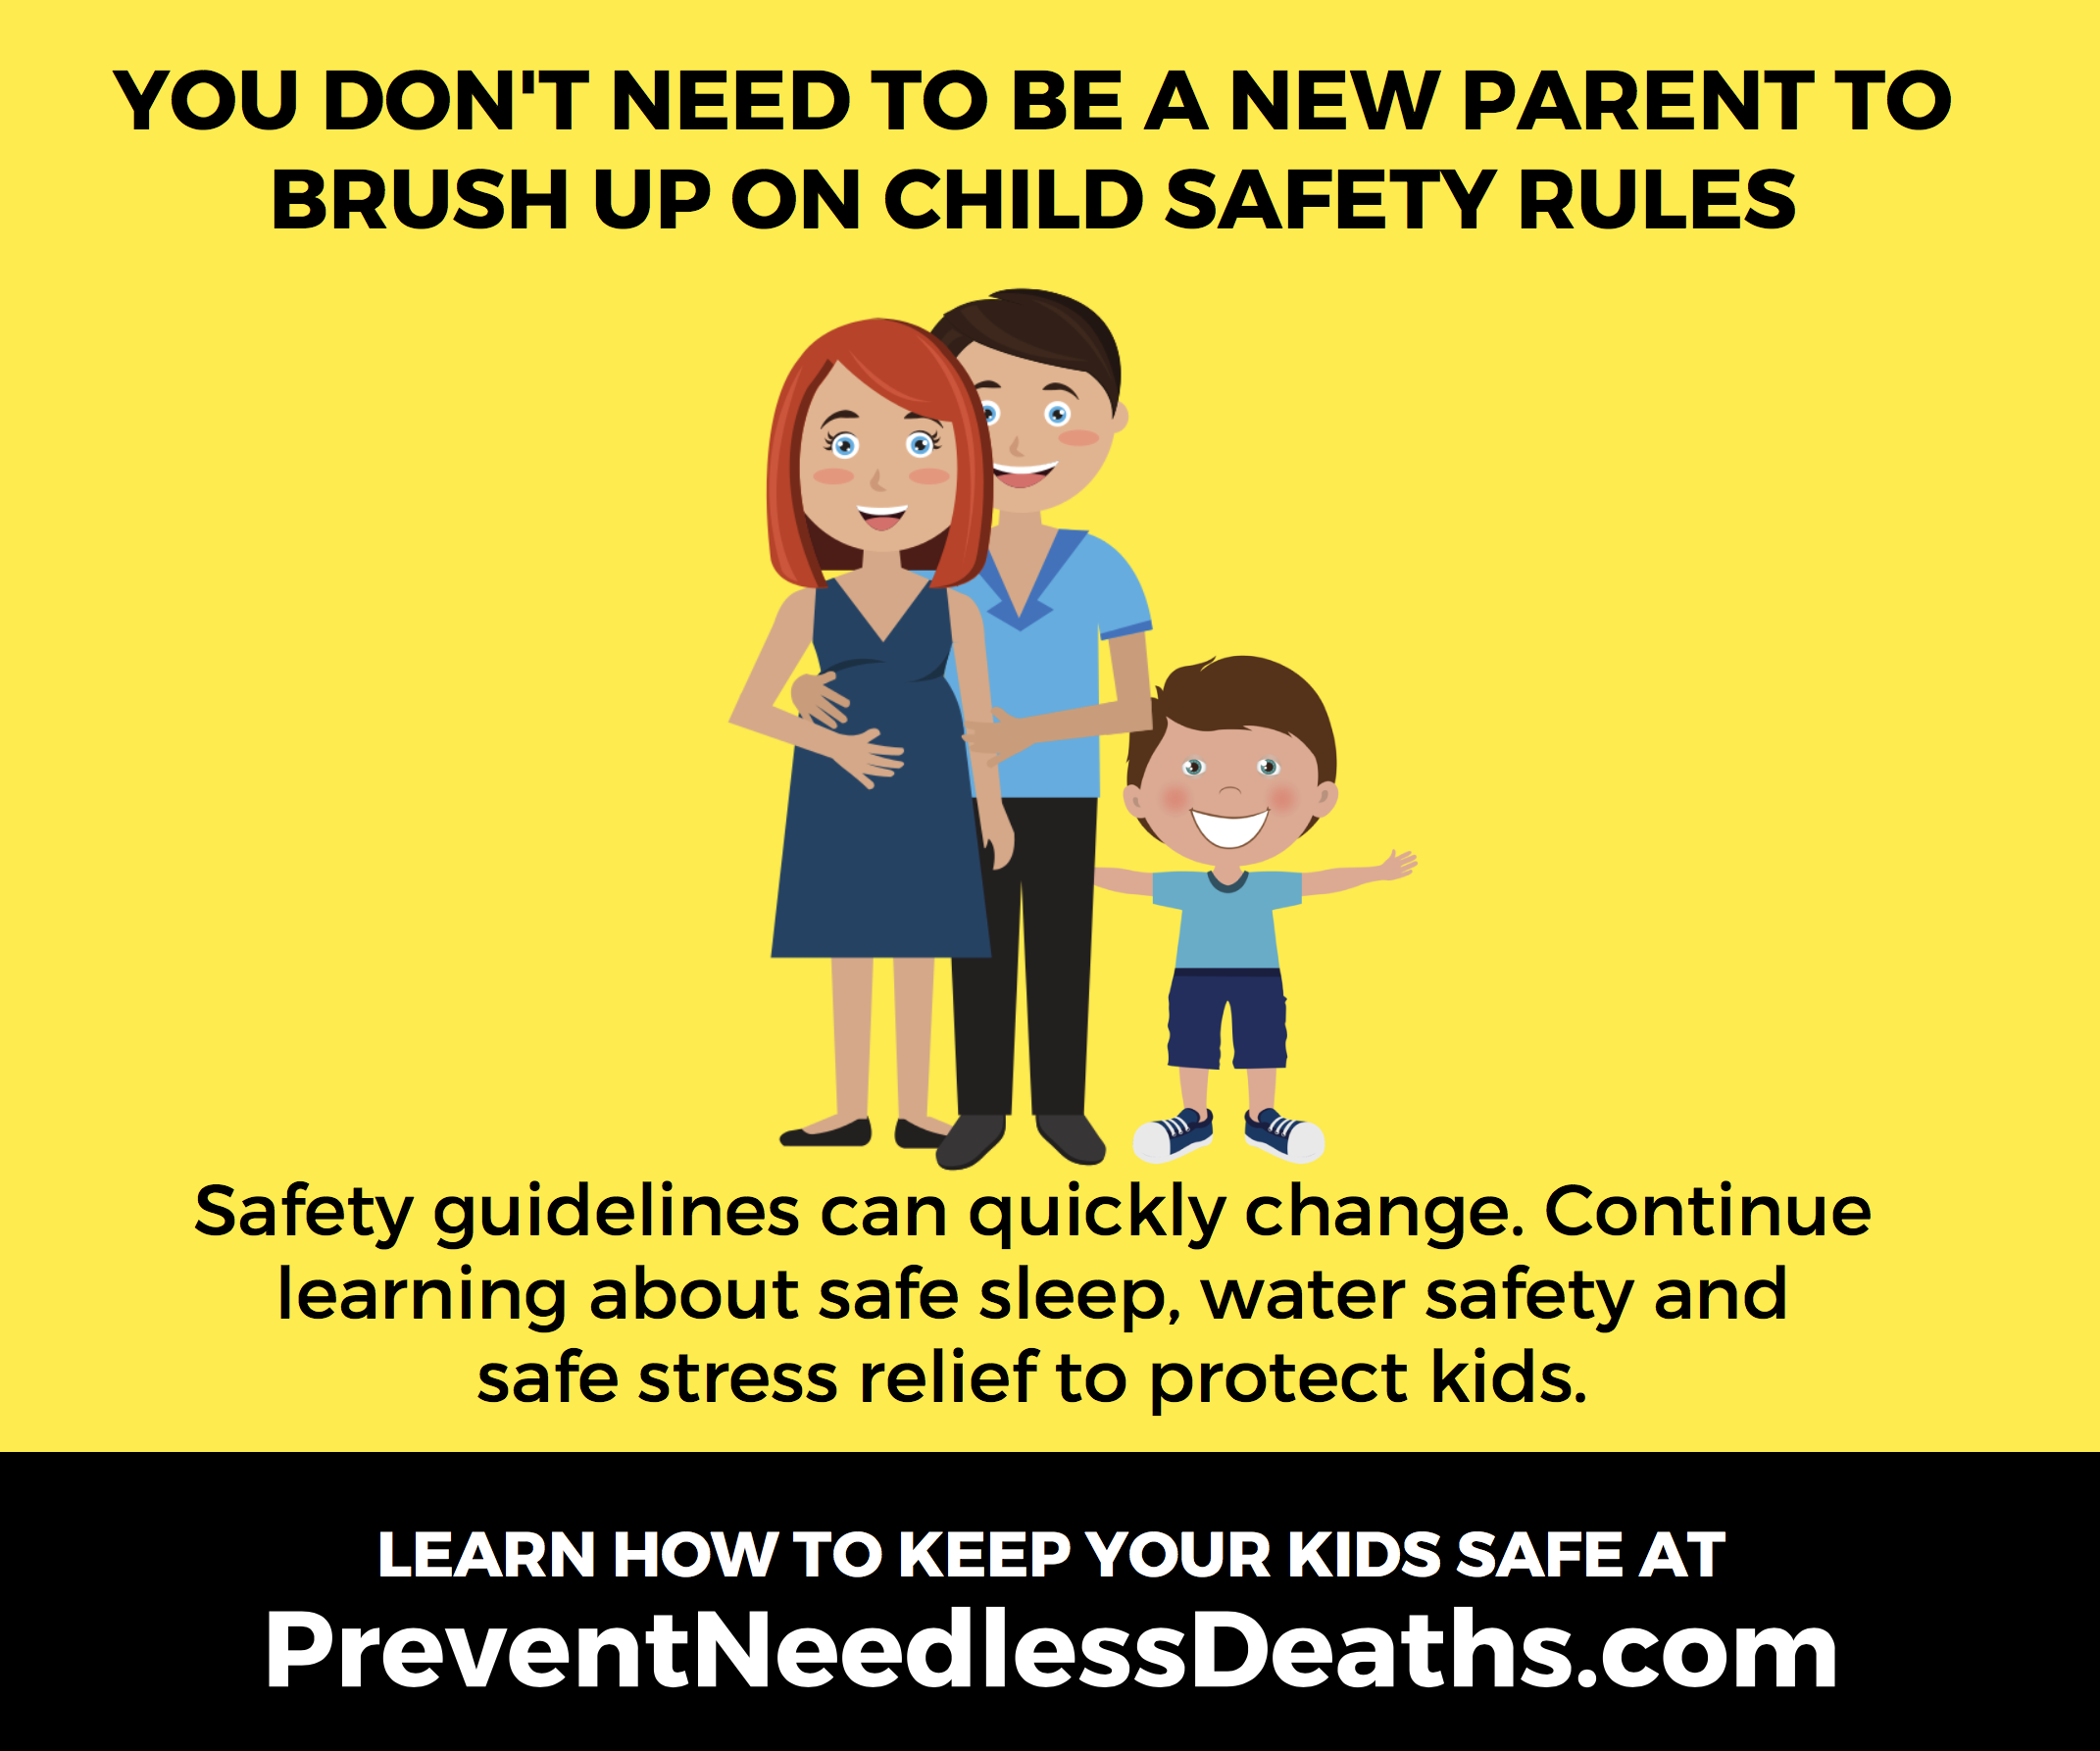 brush up on child safety rules